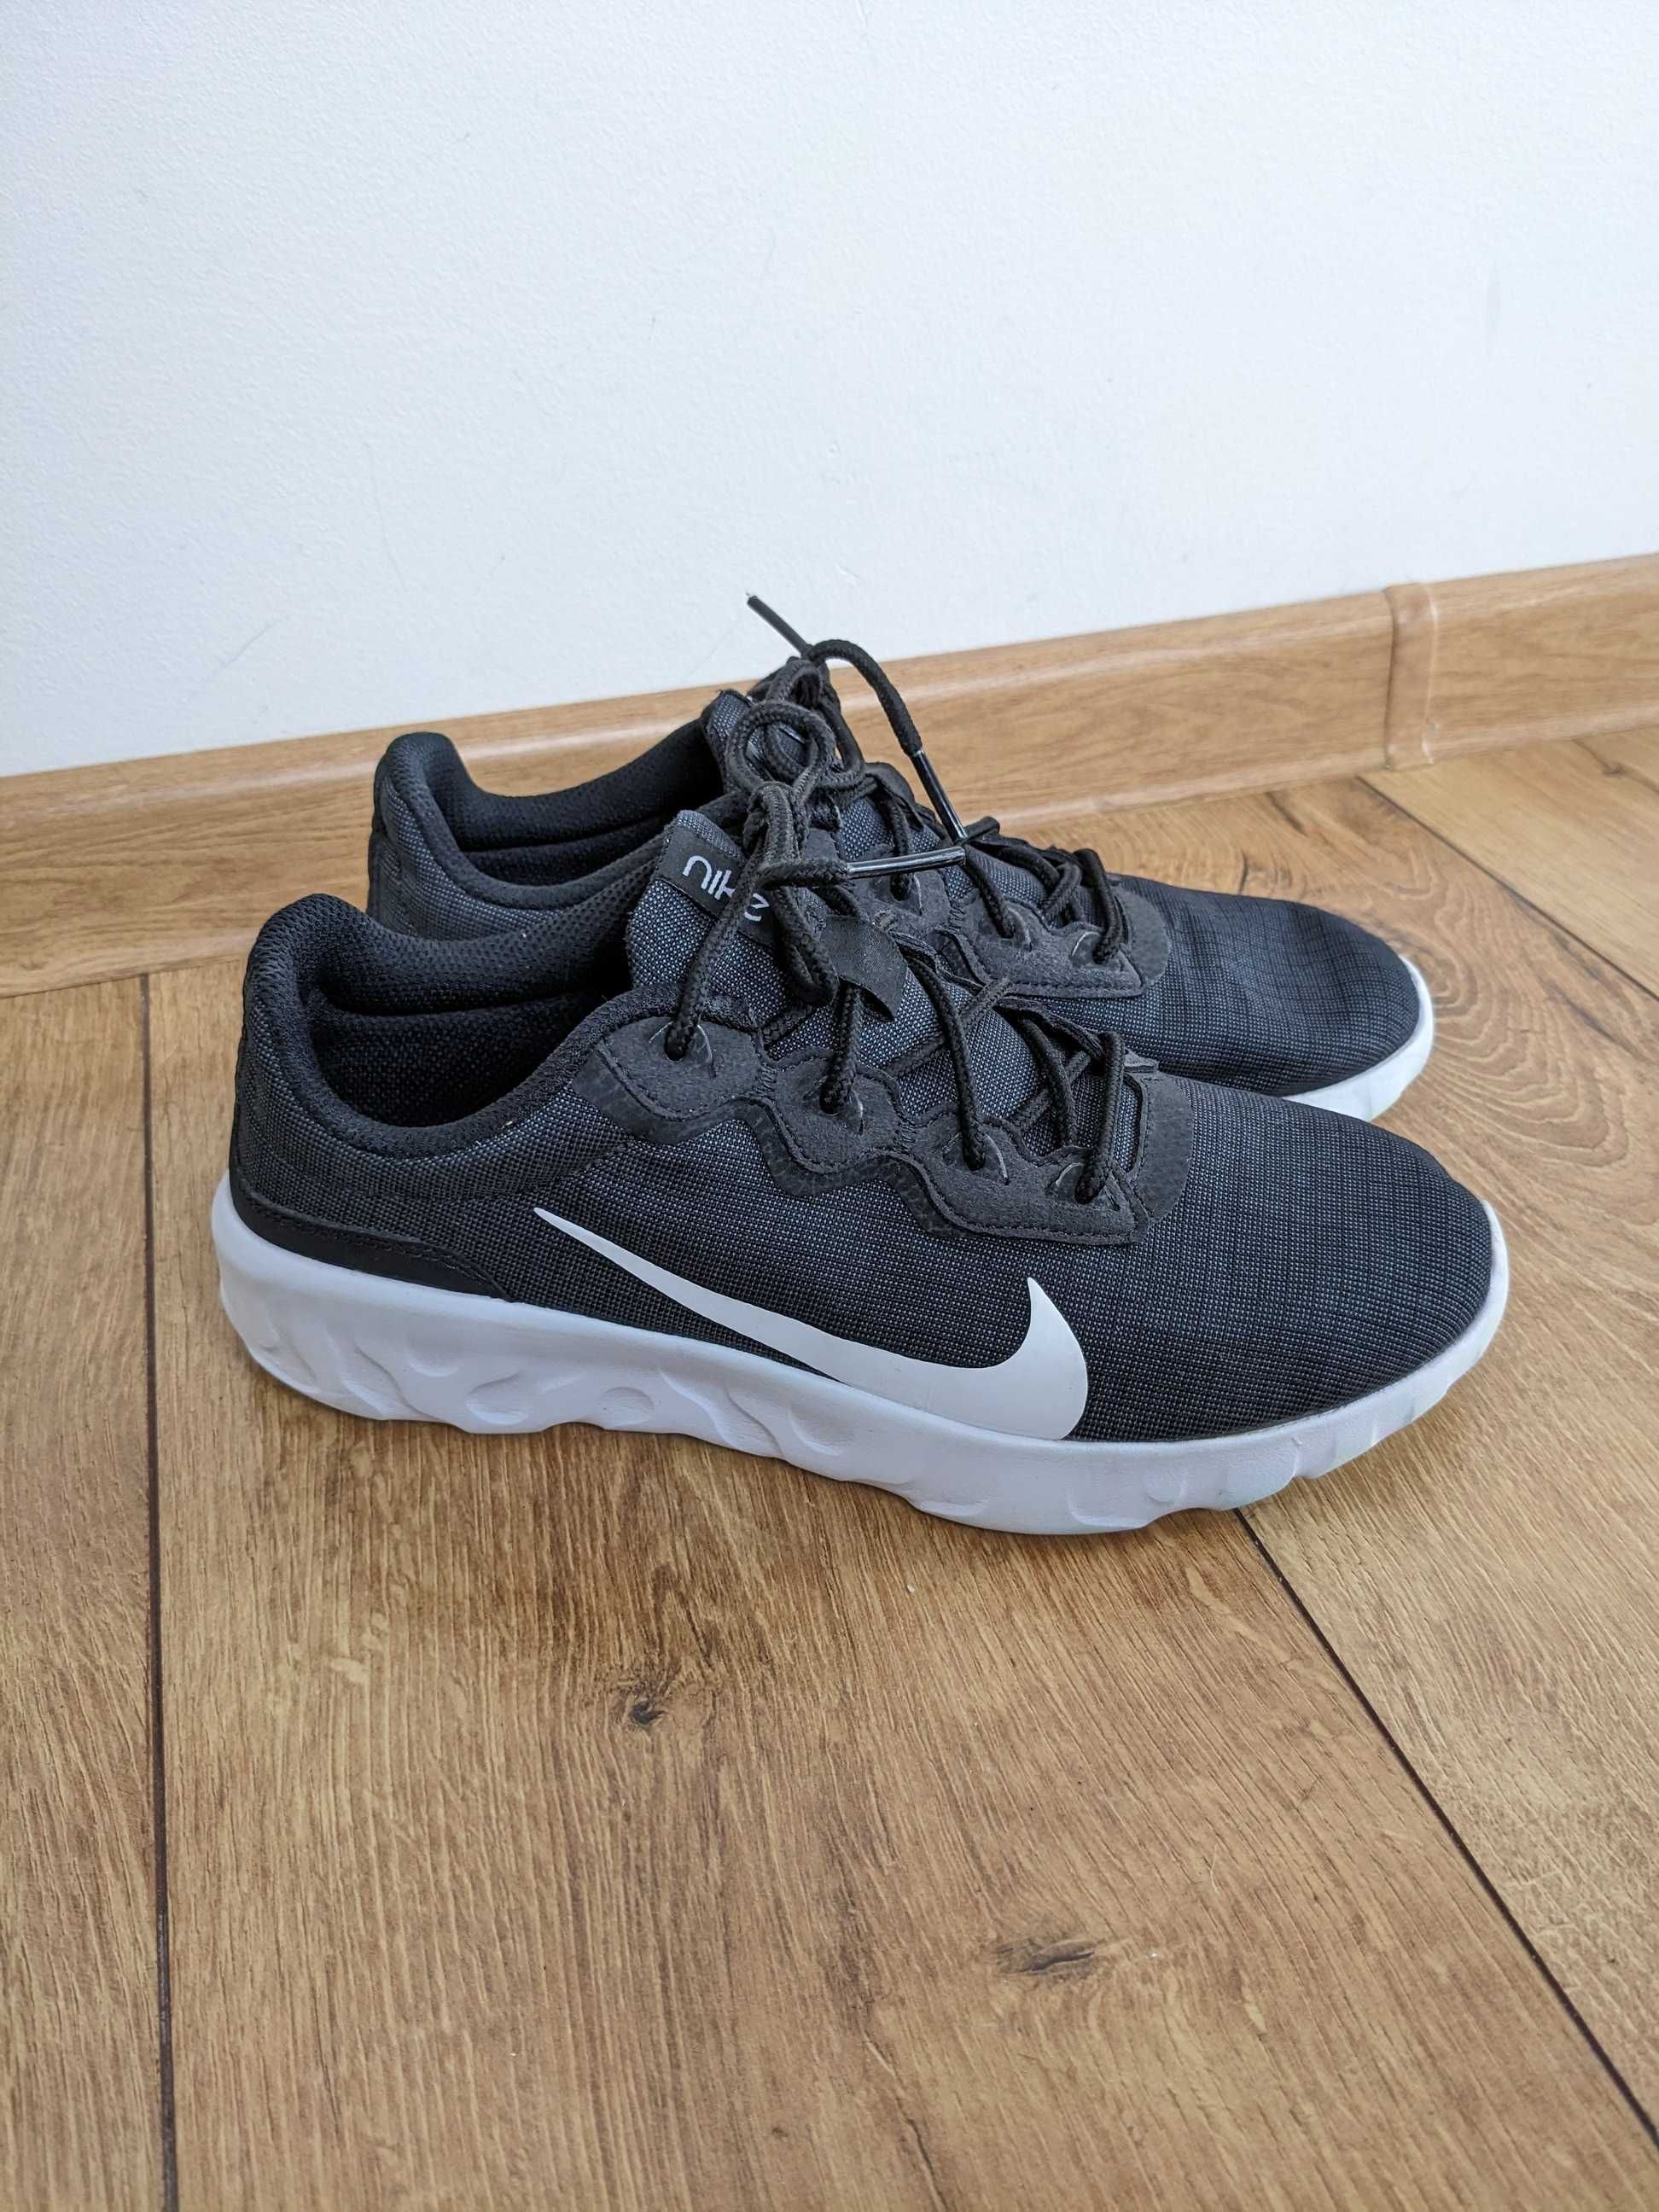 Nike Explore Strada, rozmiar 38